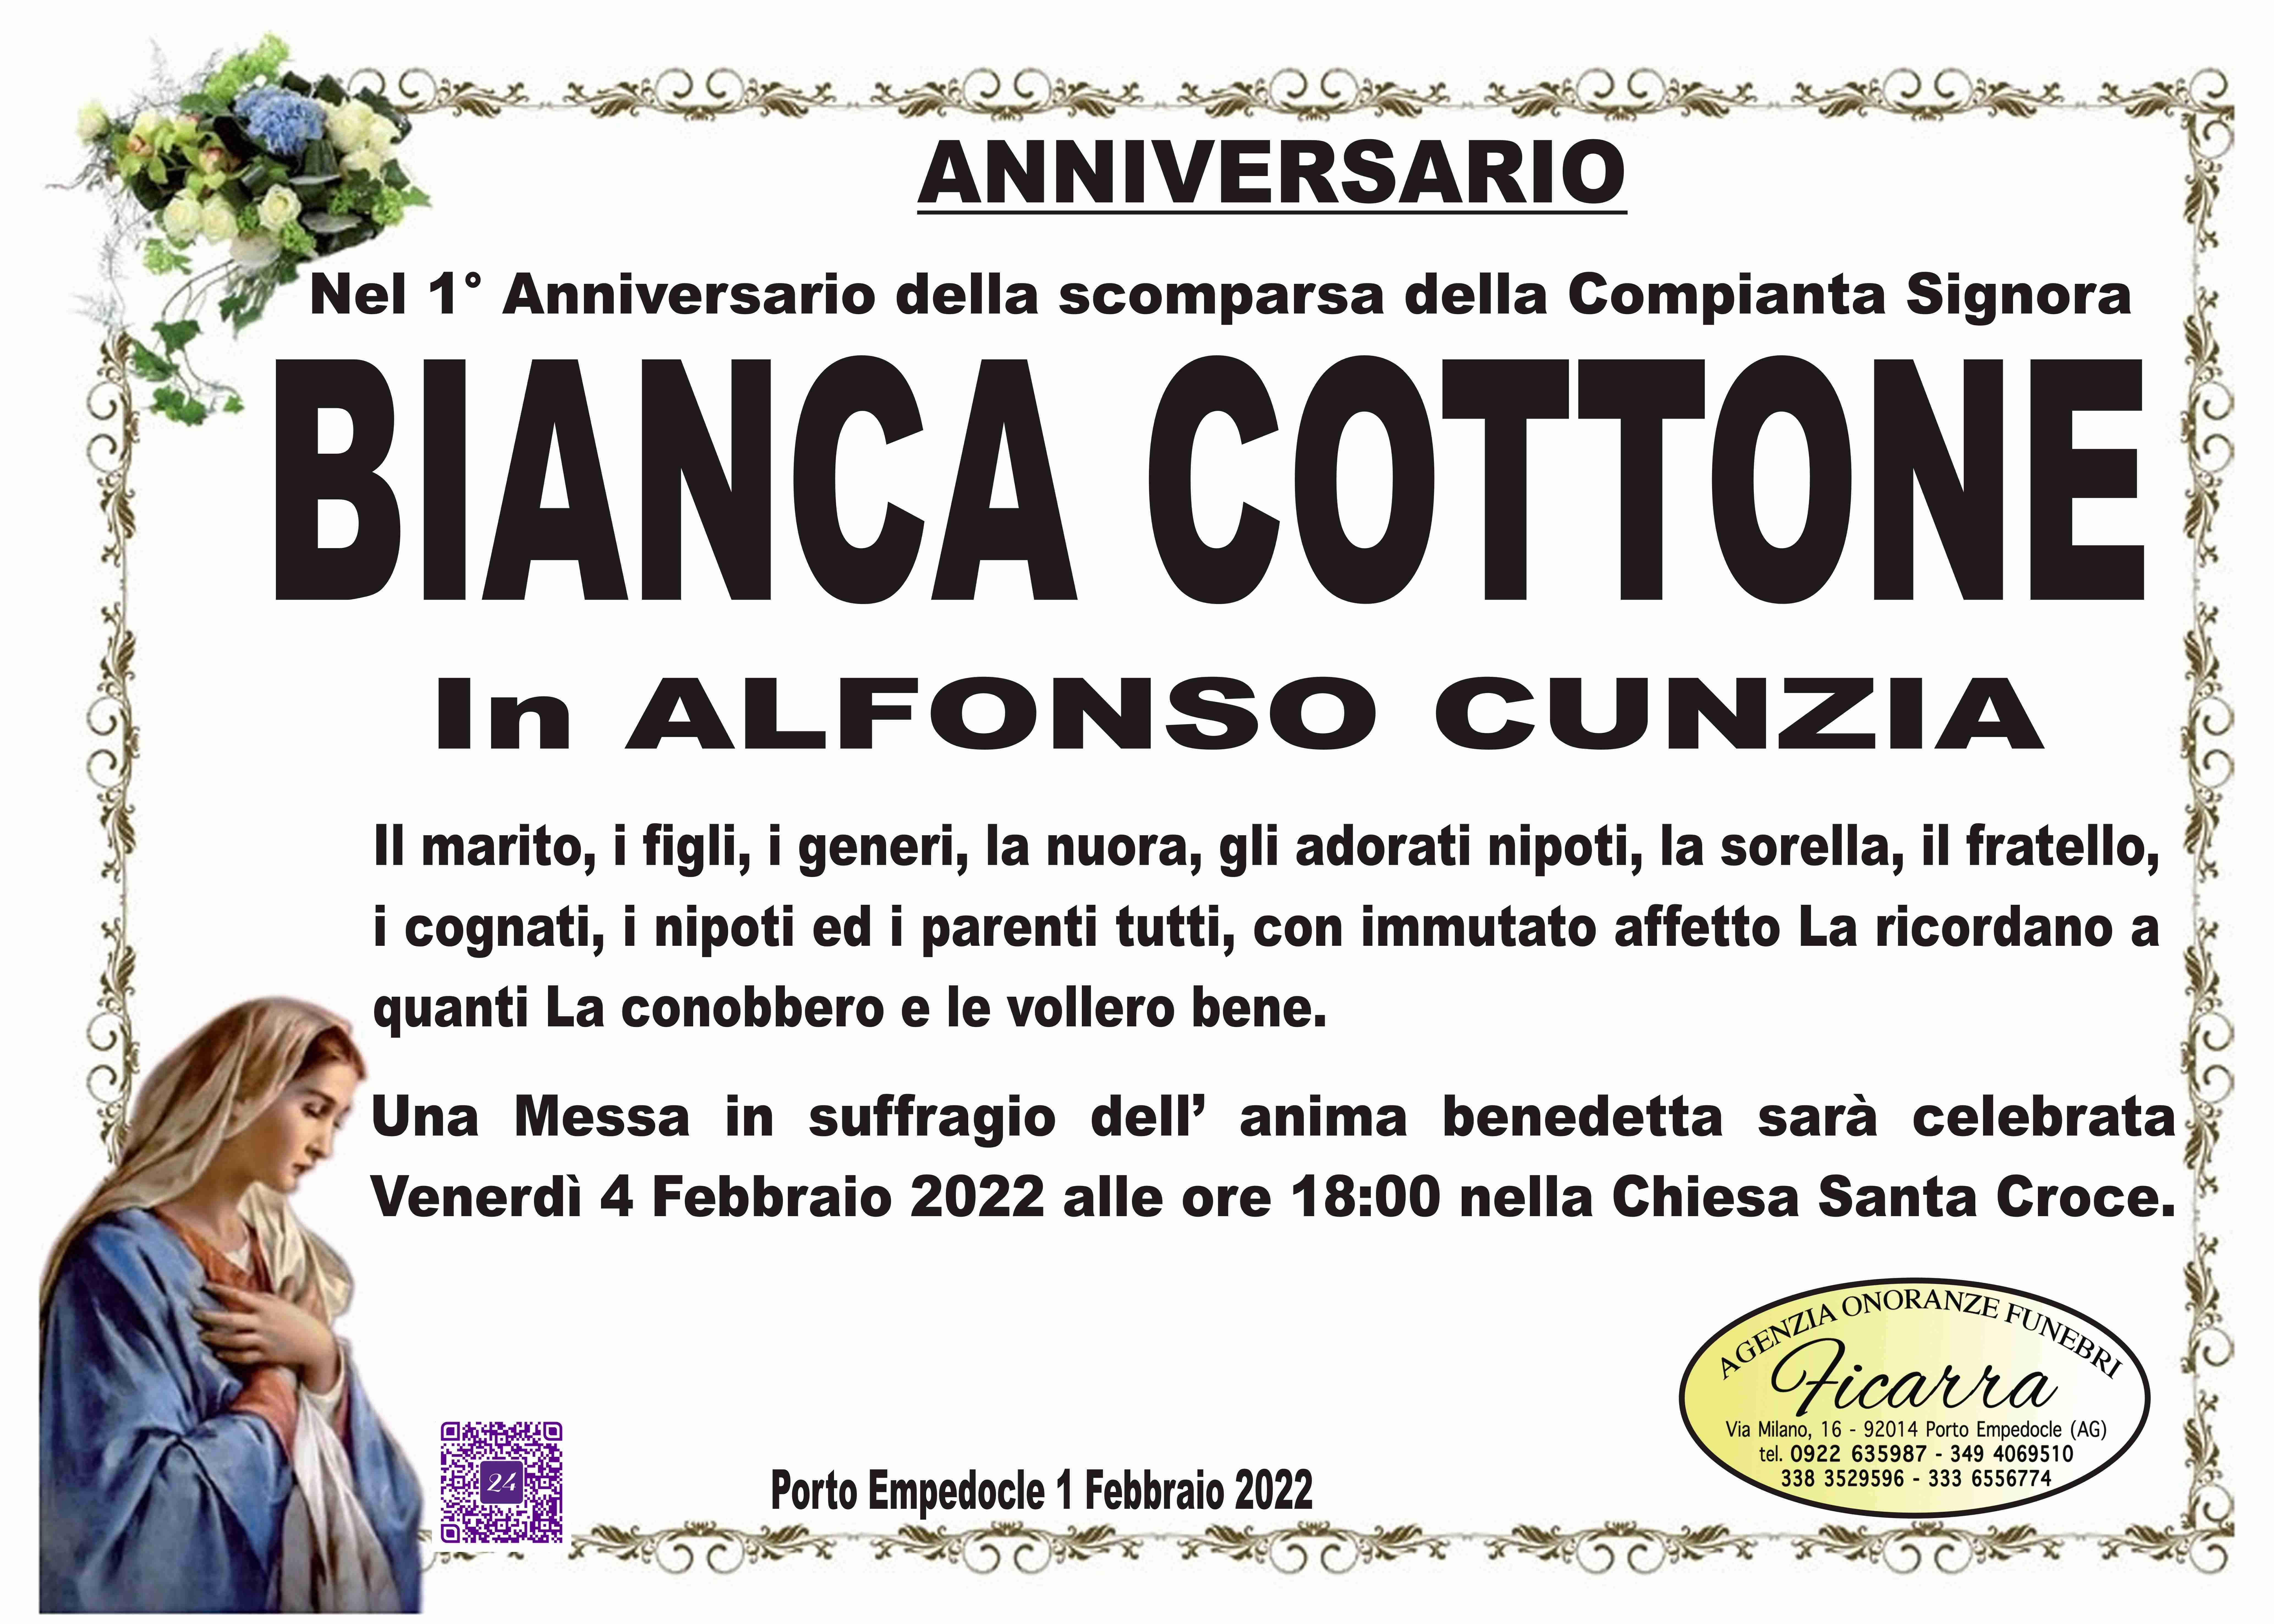 Bianca Cottone